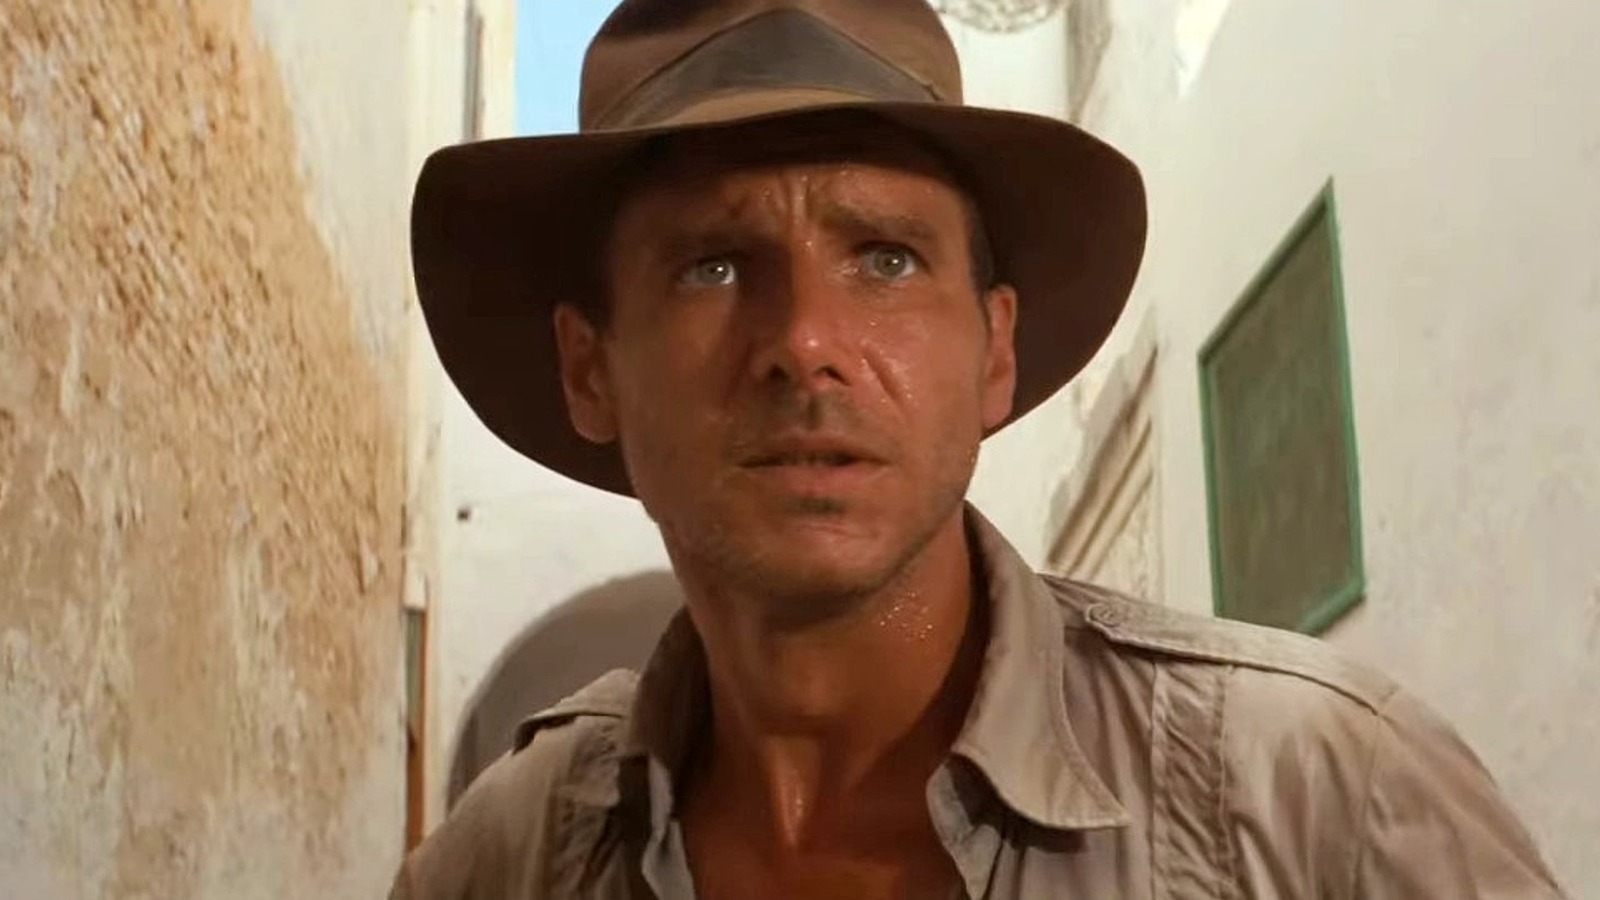 Harrison Ford - Indiana Jones [#1] Raiders of the Lost Ark #2 - Fan Forum